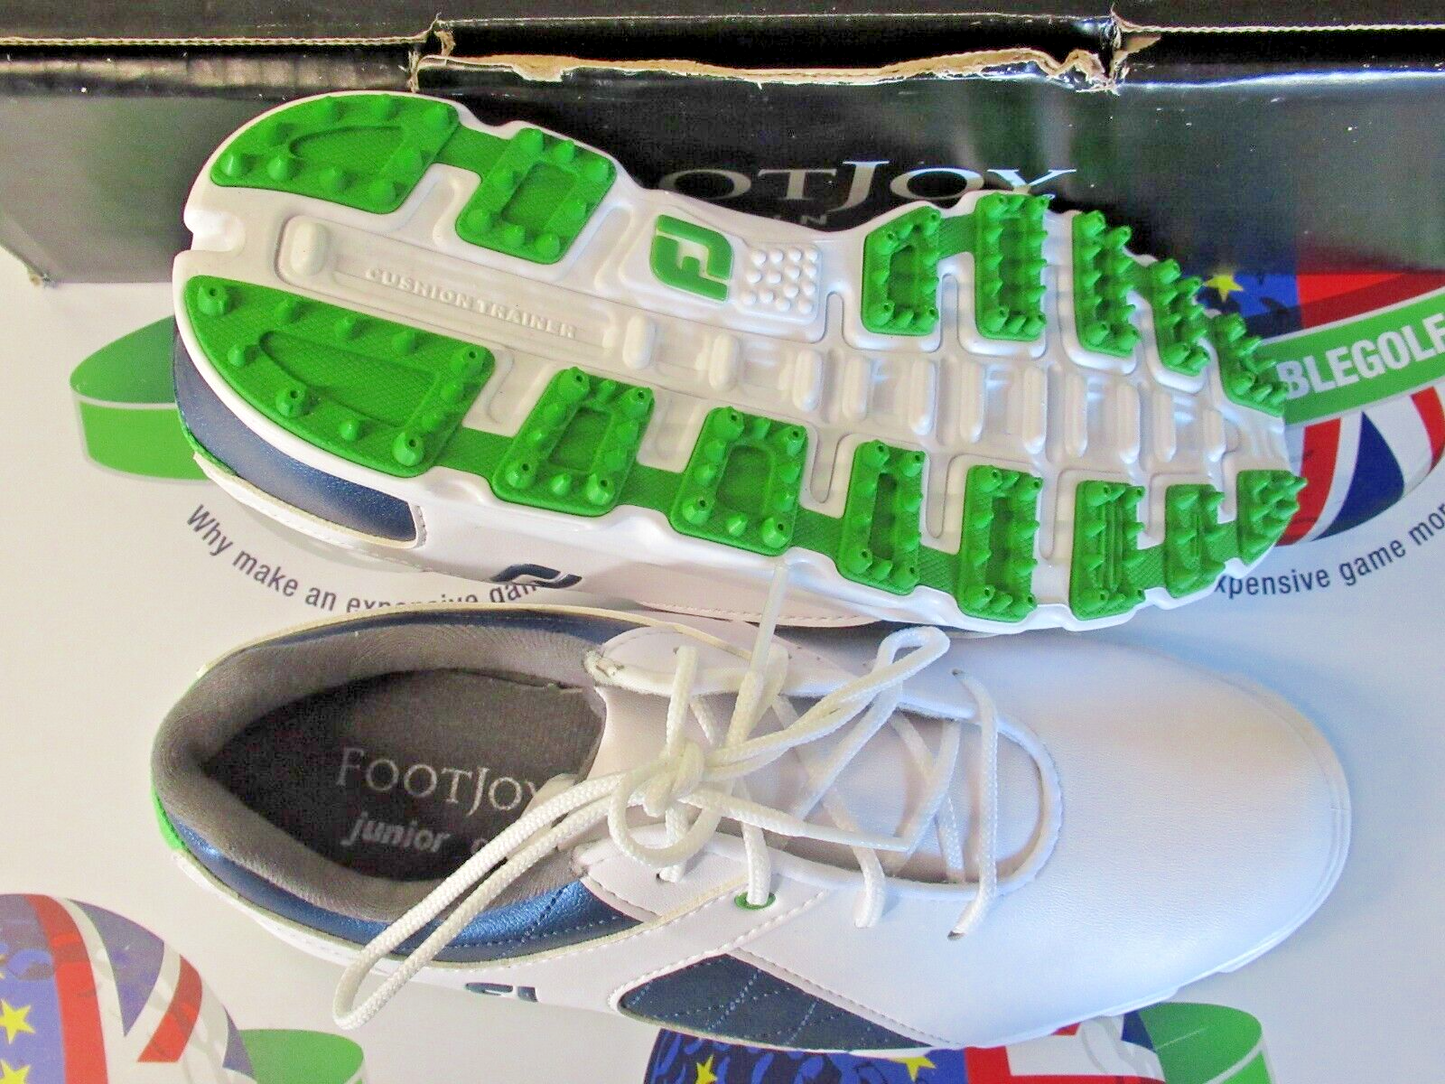 footjoy junior golf shoes 45039k white/blue/green uk size 2 medium